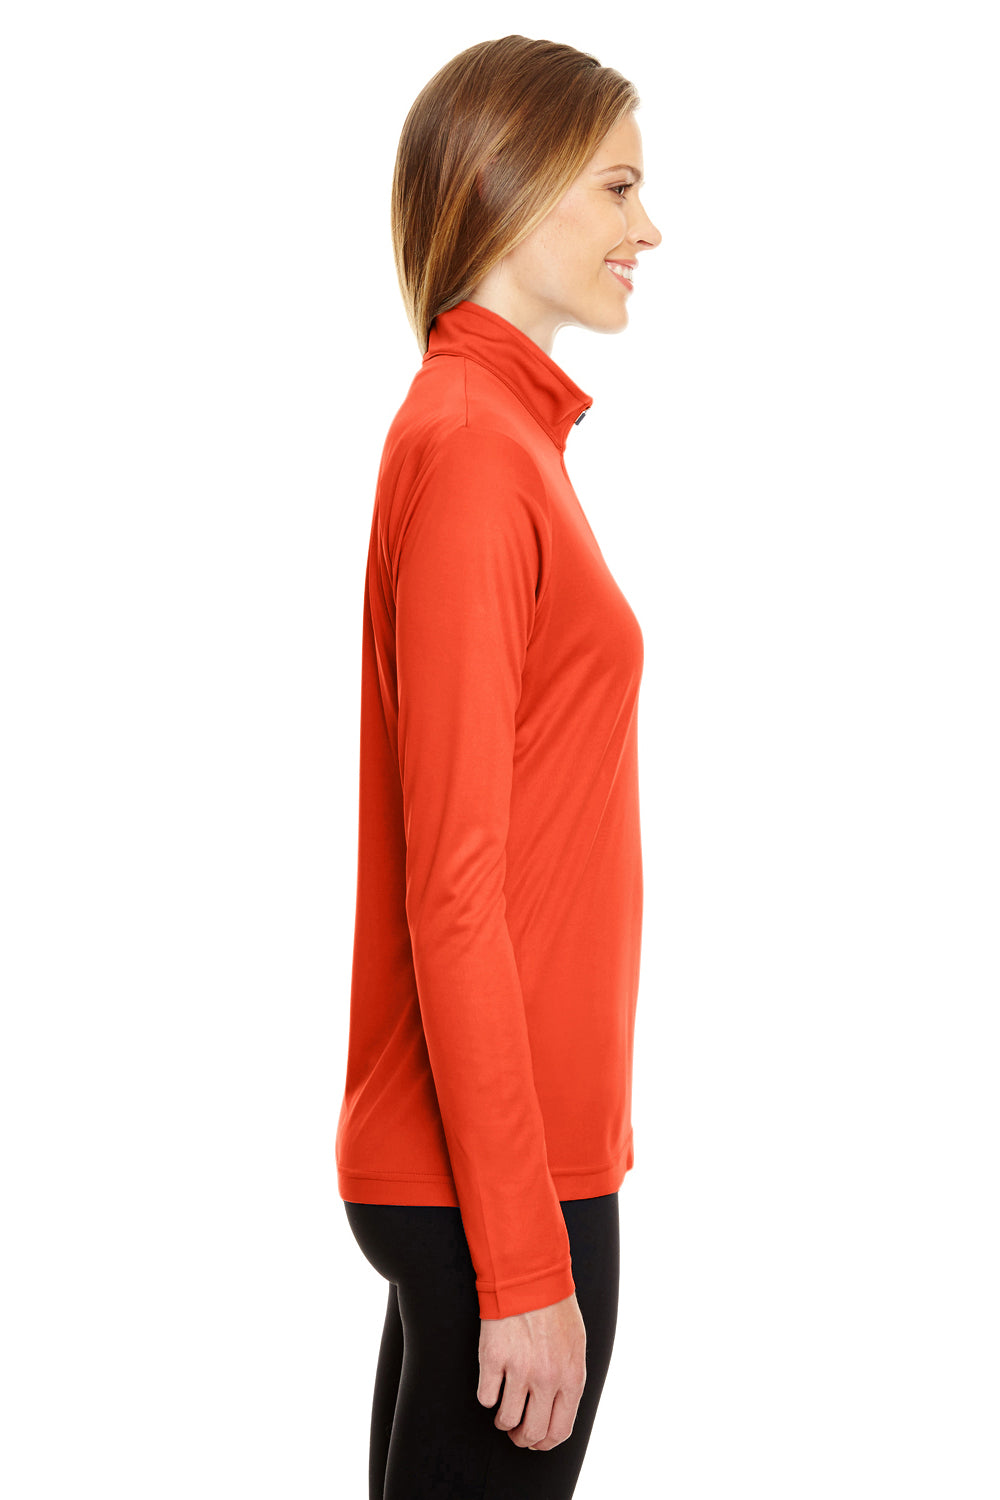 Team 365 TT31W Womens Zone Performance Moisture Wicking 1/4 Zip Sweatshirt Orange Side